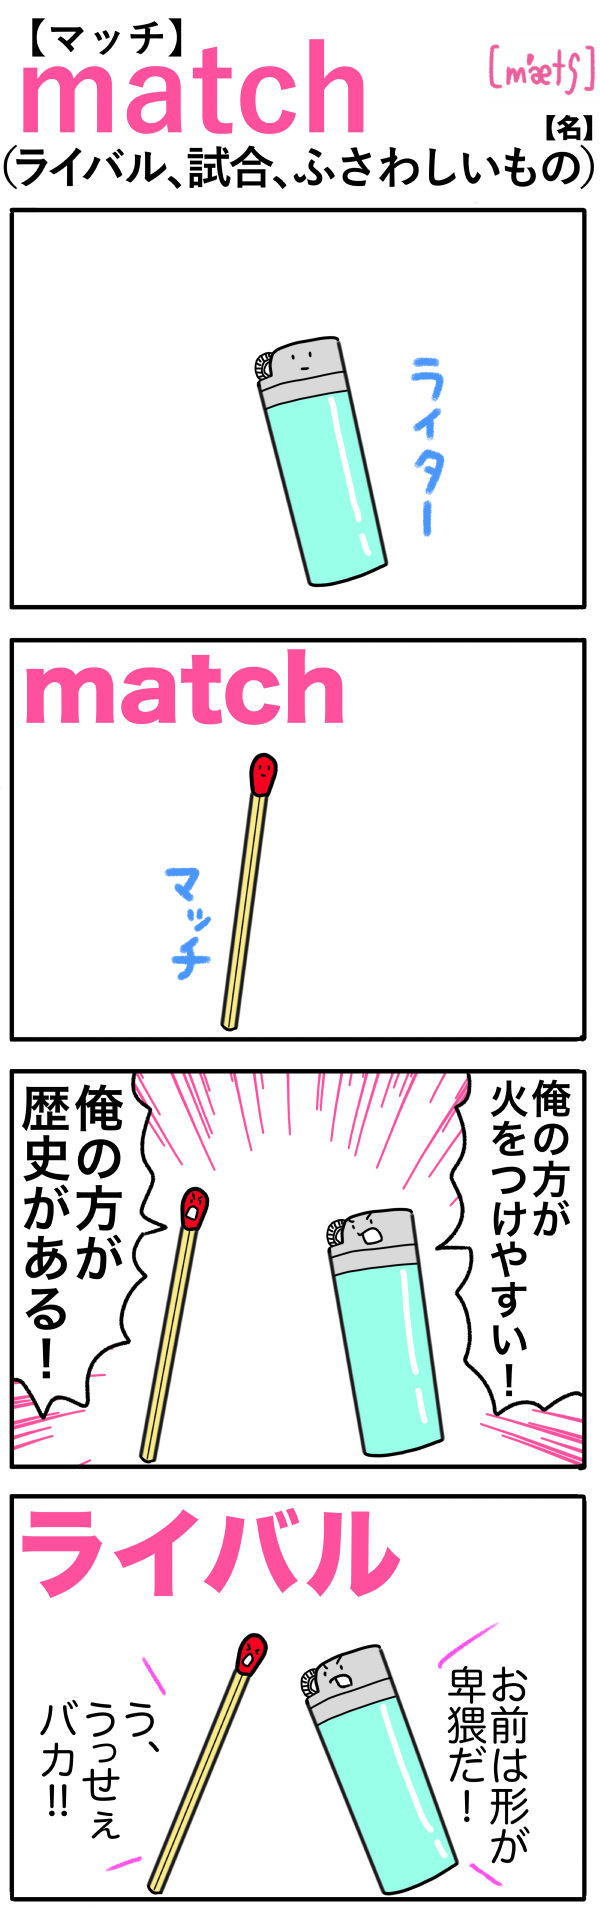 match（ライバル）の語呂合わせ英単語